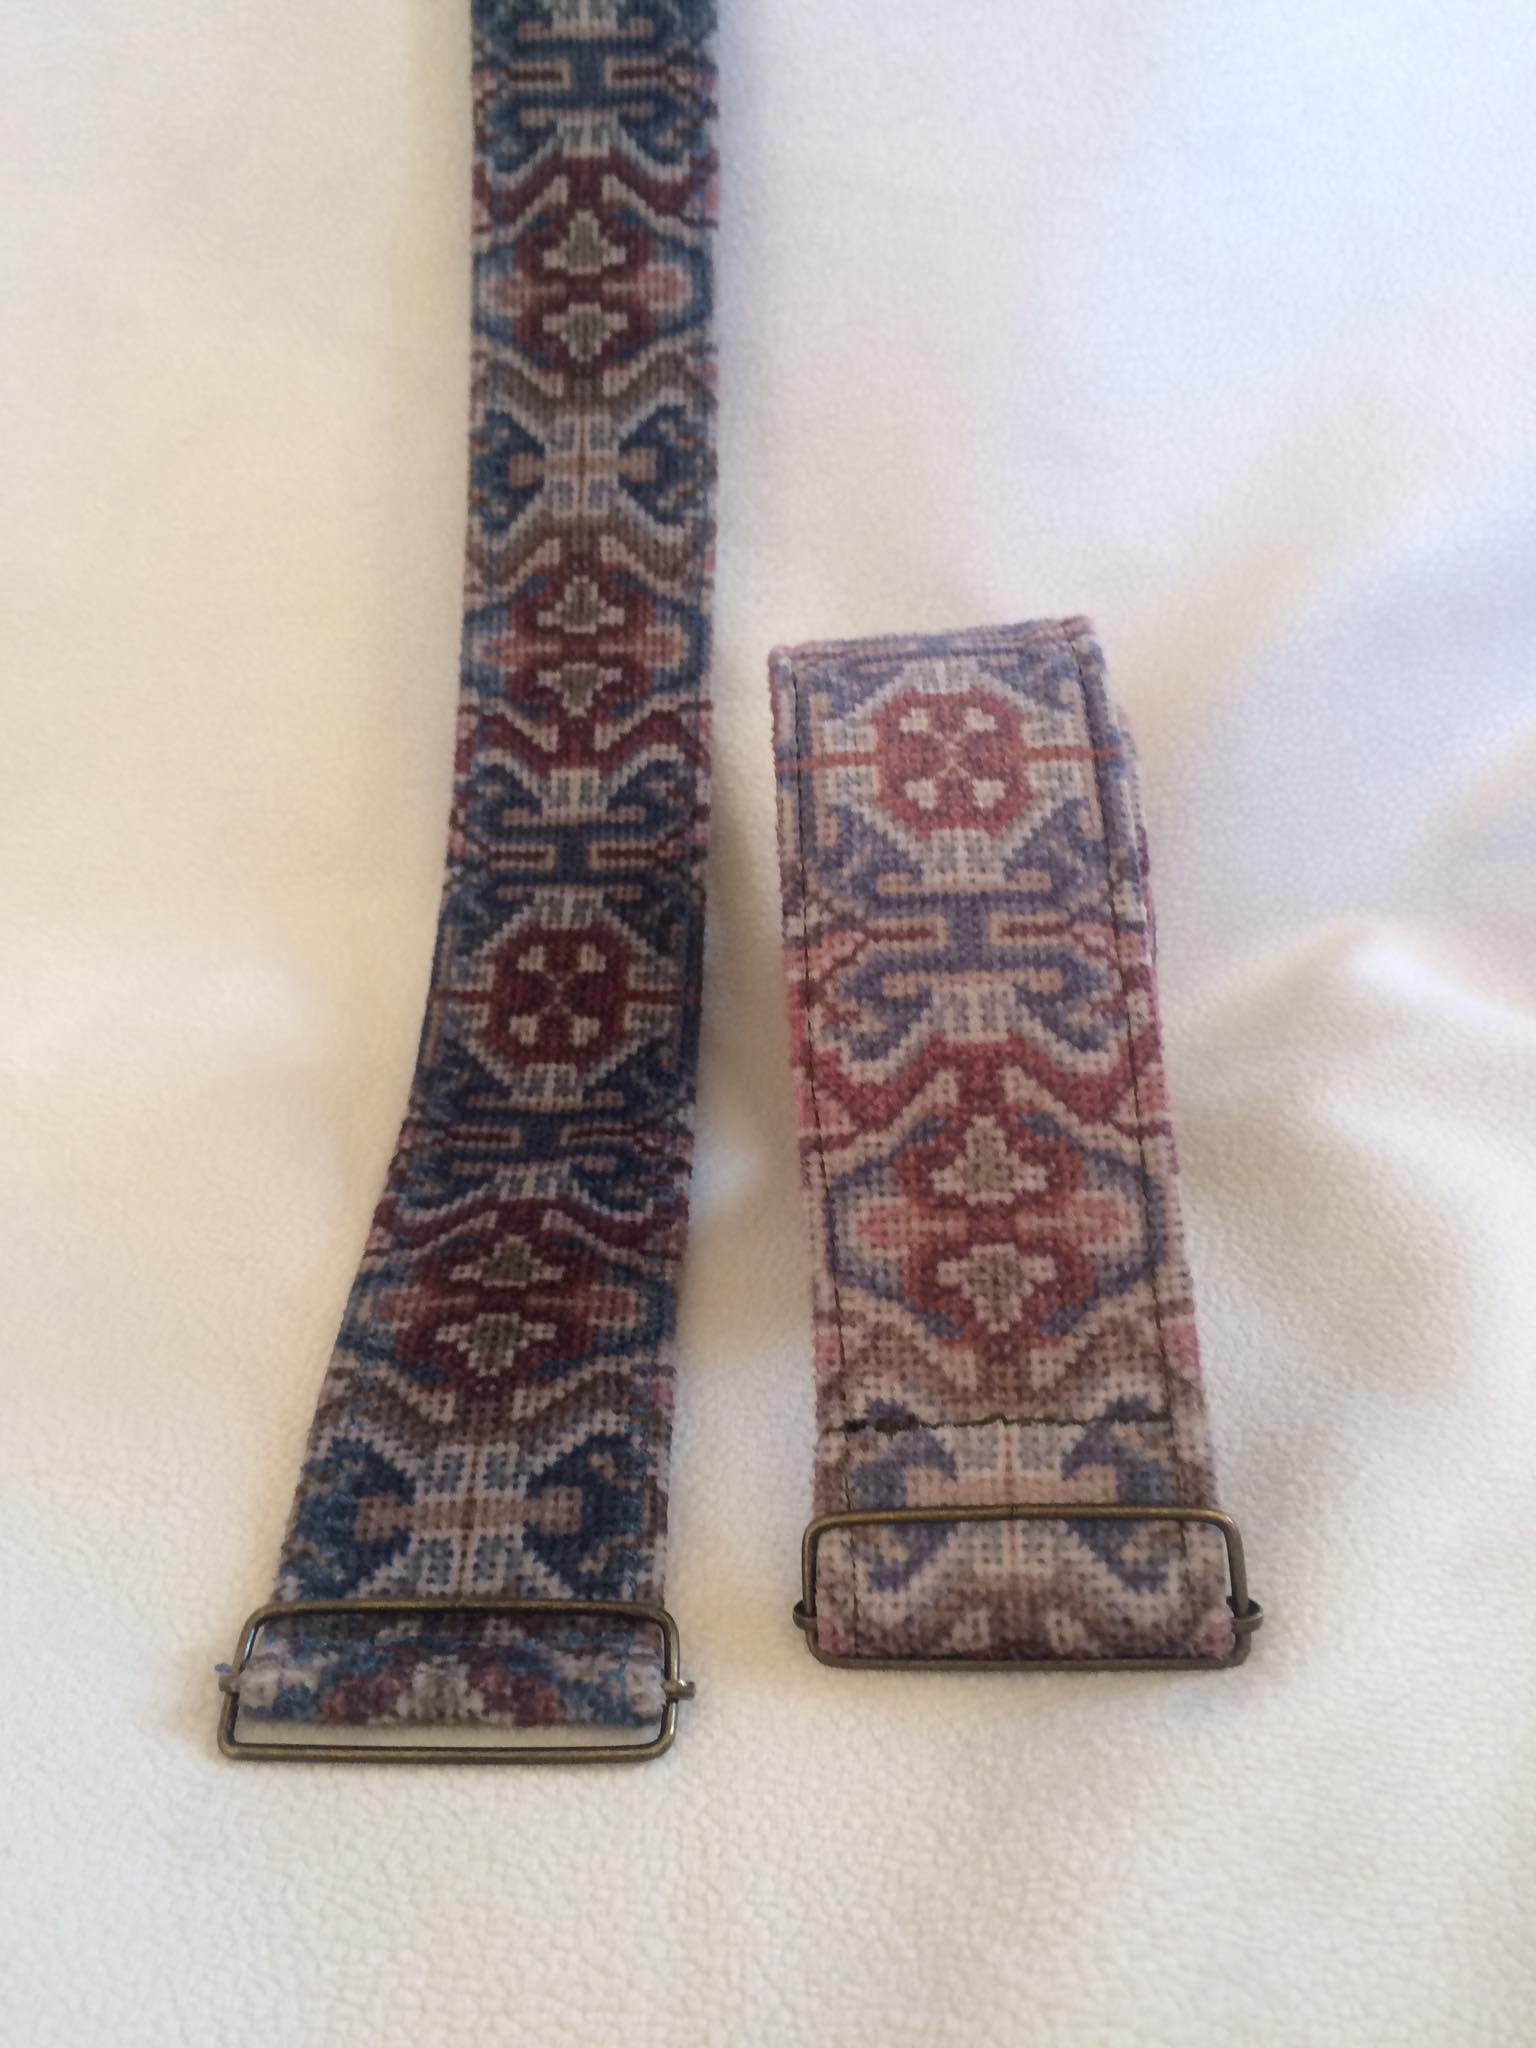 Handmade Belt with Armenian Ornaments